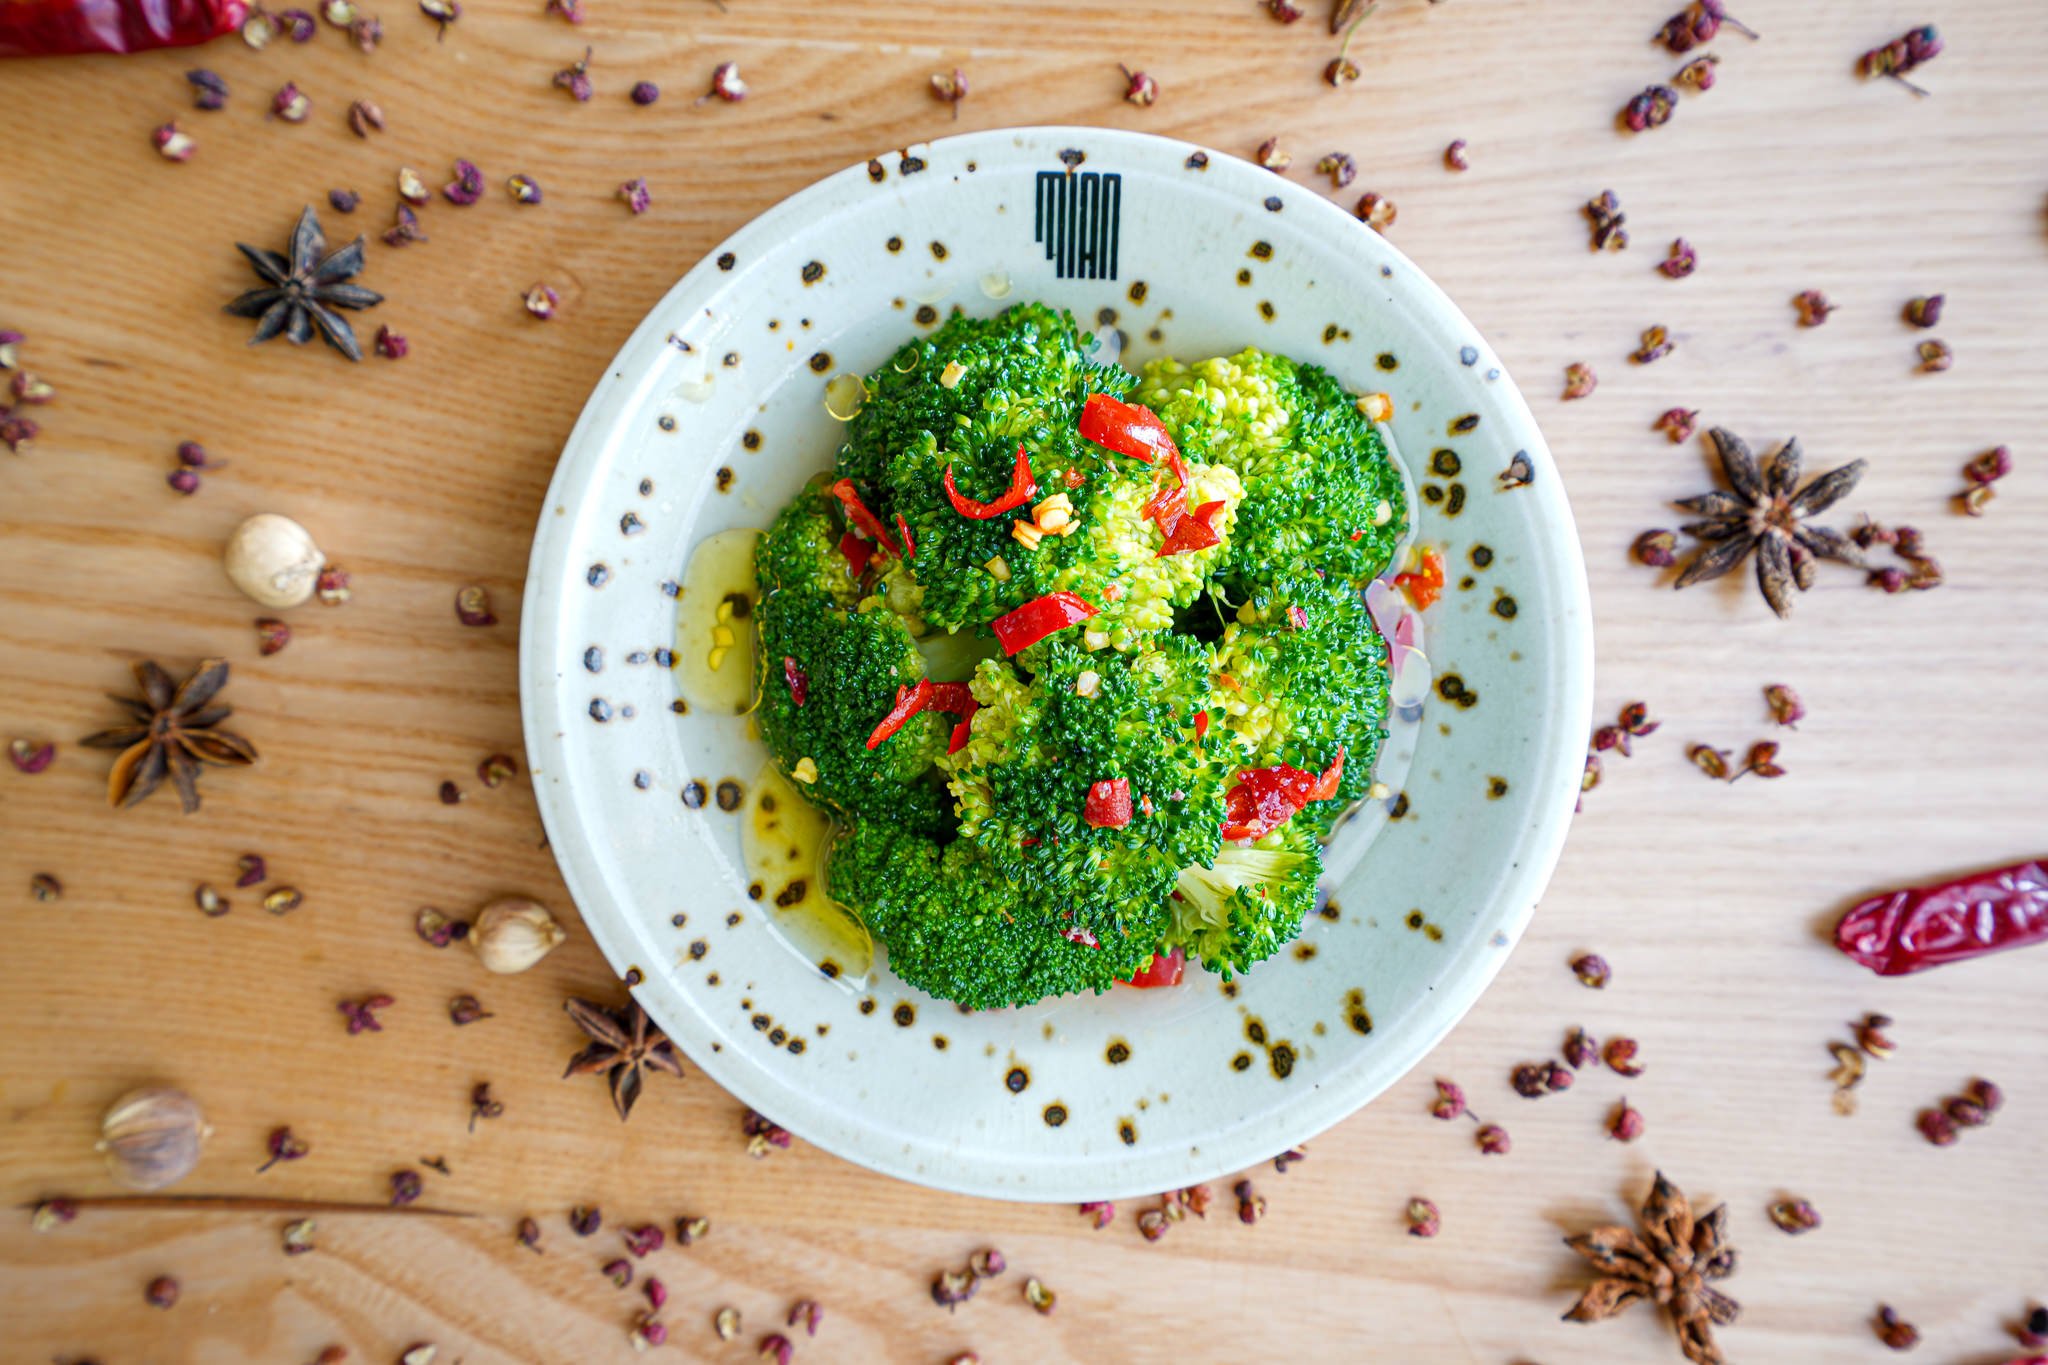 Mian dish made with broccoli